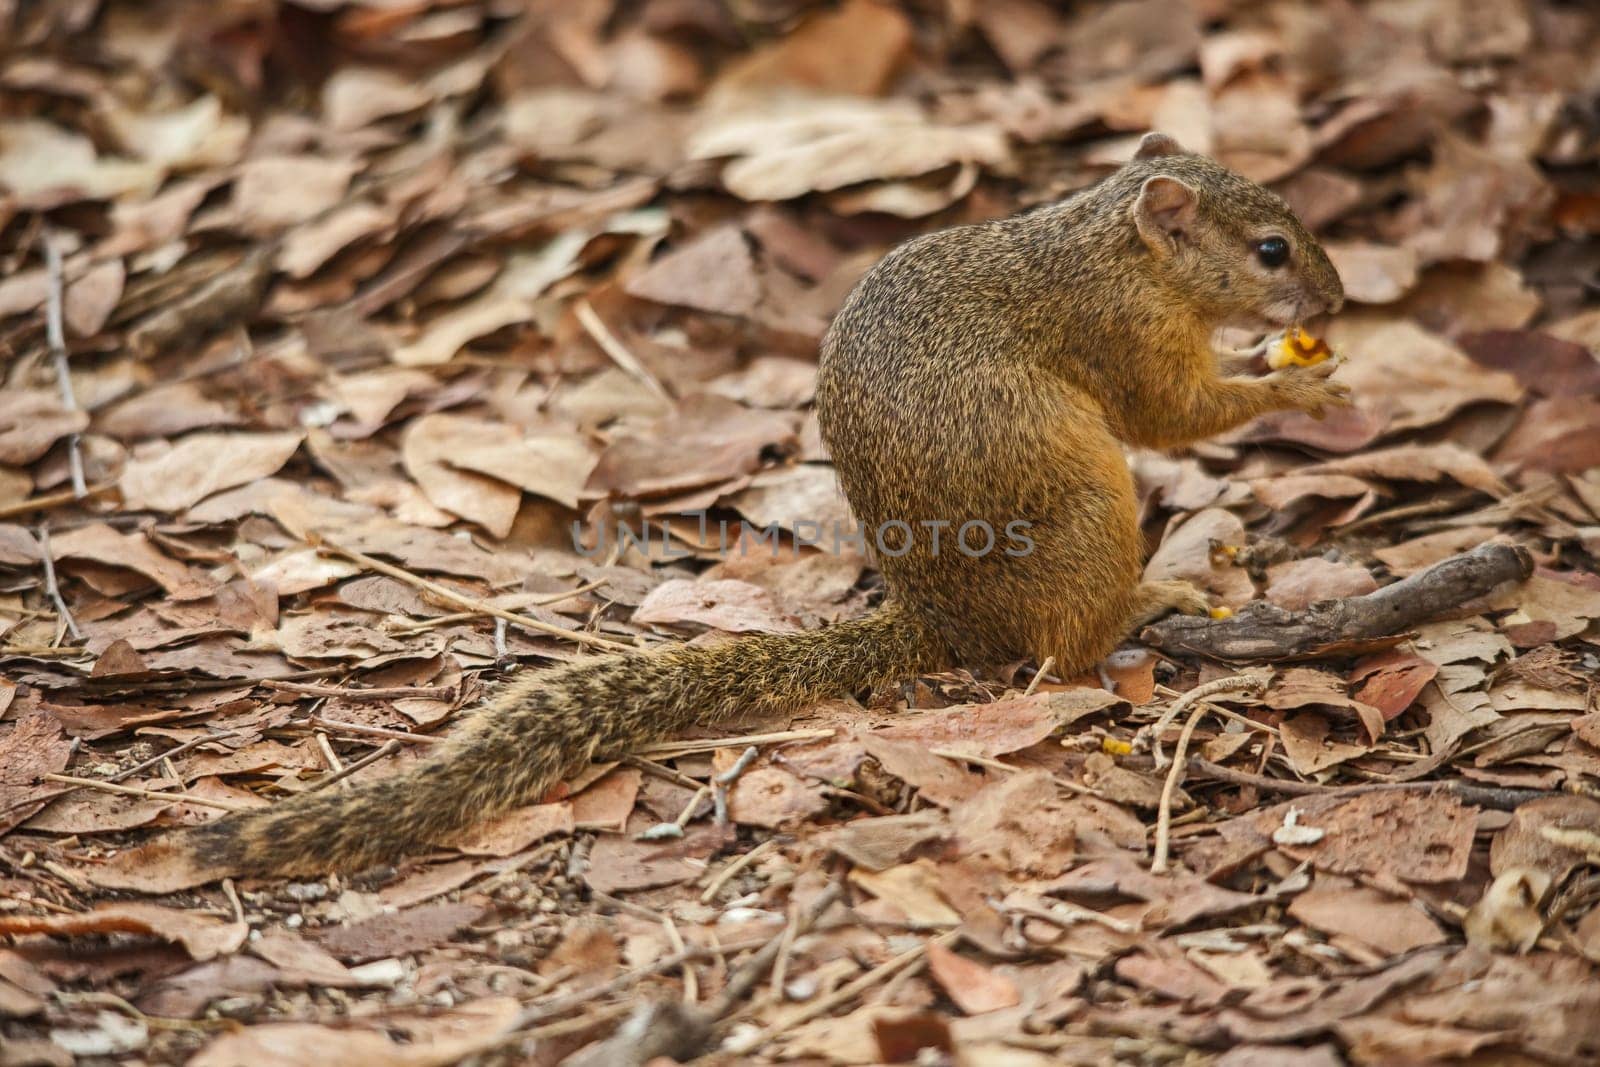 Smith's Bush Squirrel (Paraxerus cepapi) 14878 by kobus_peche